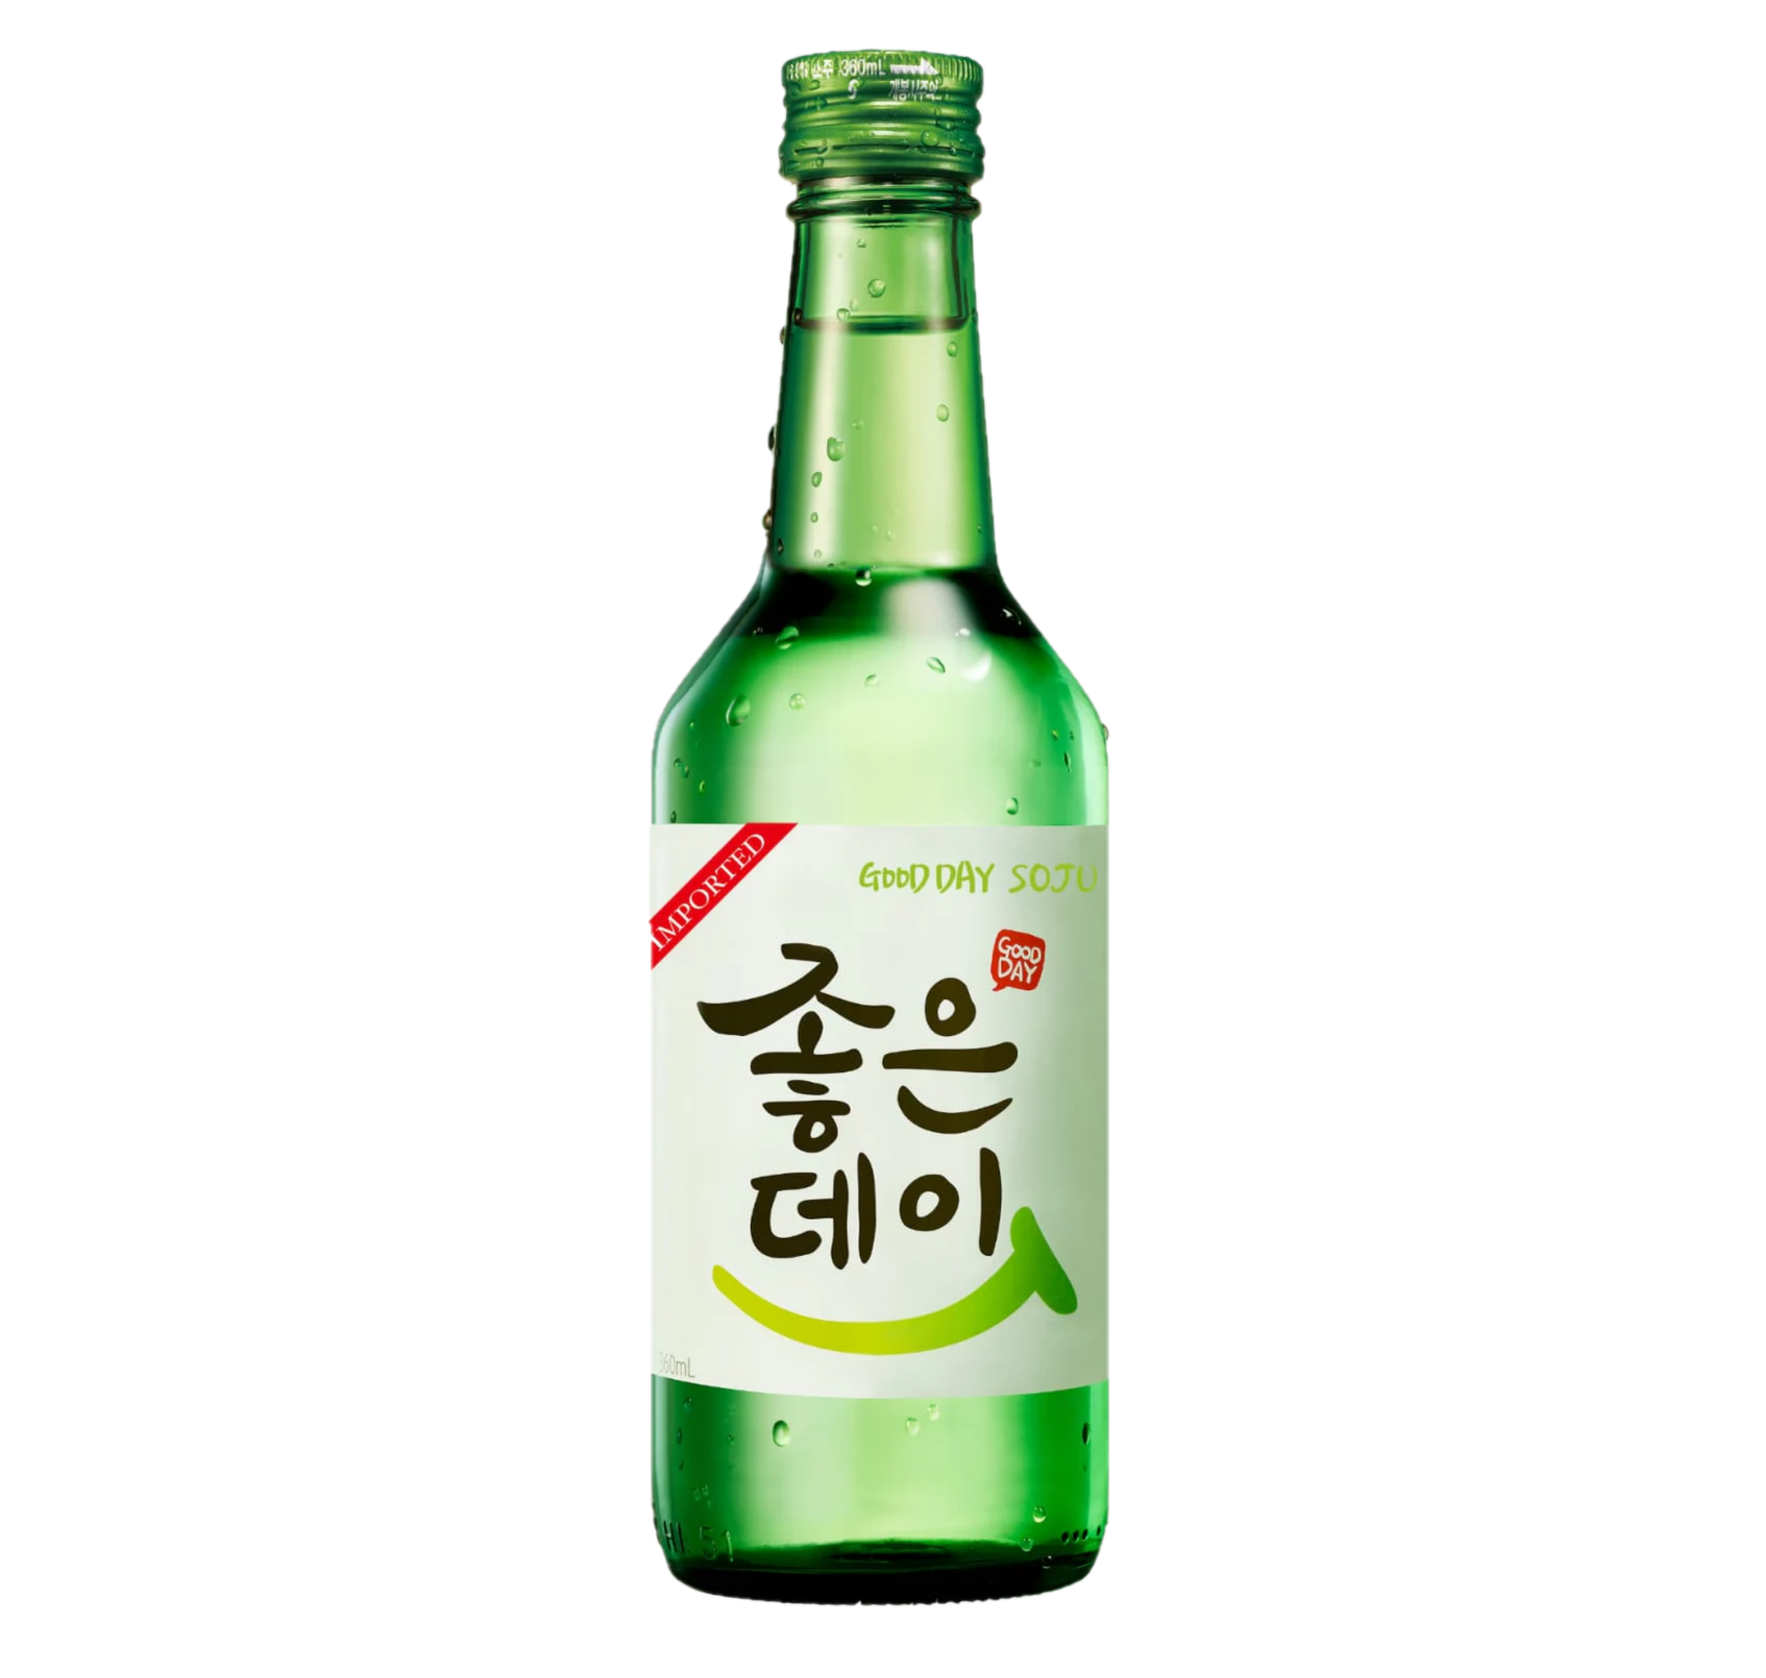 Good day soju original flavor 16,9% ALC.